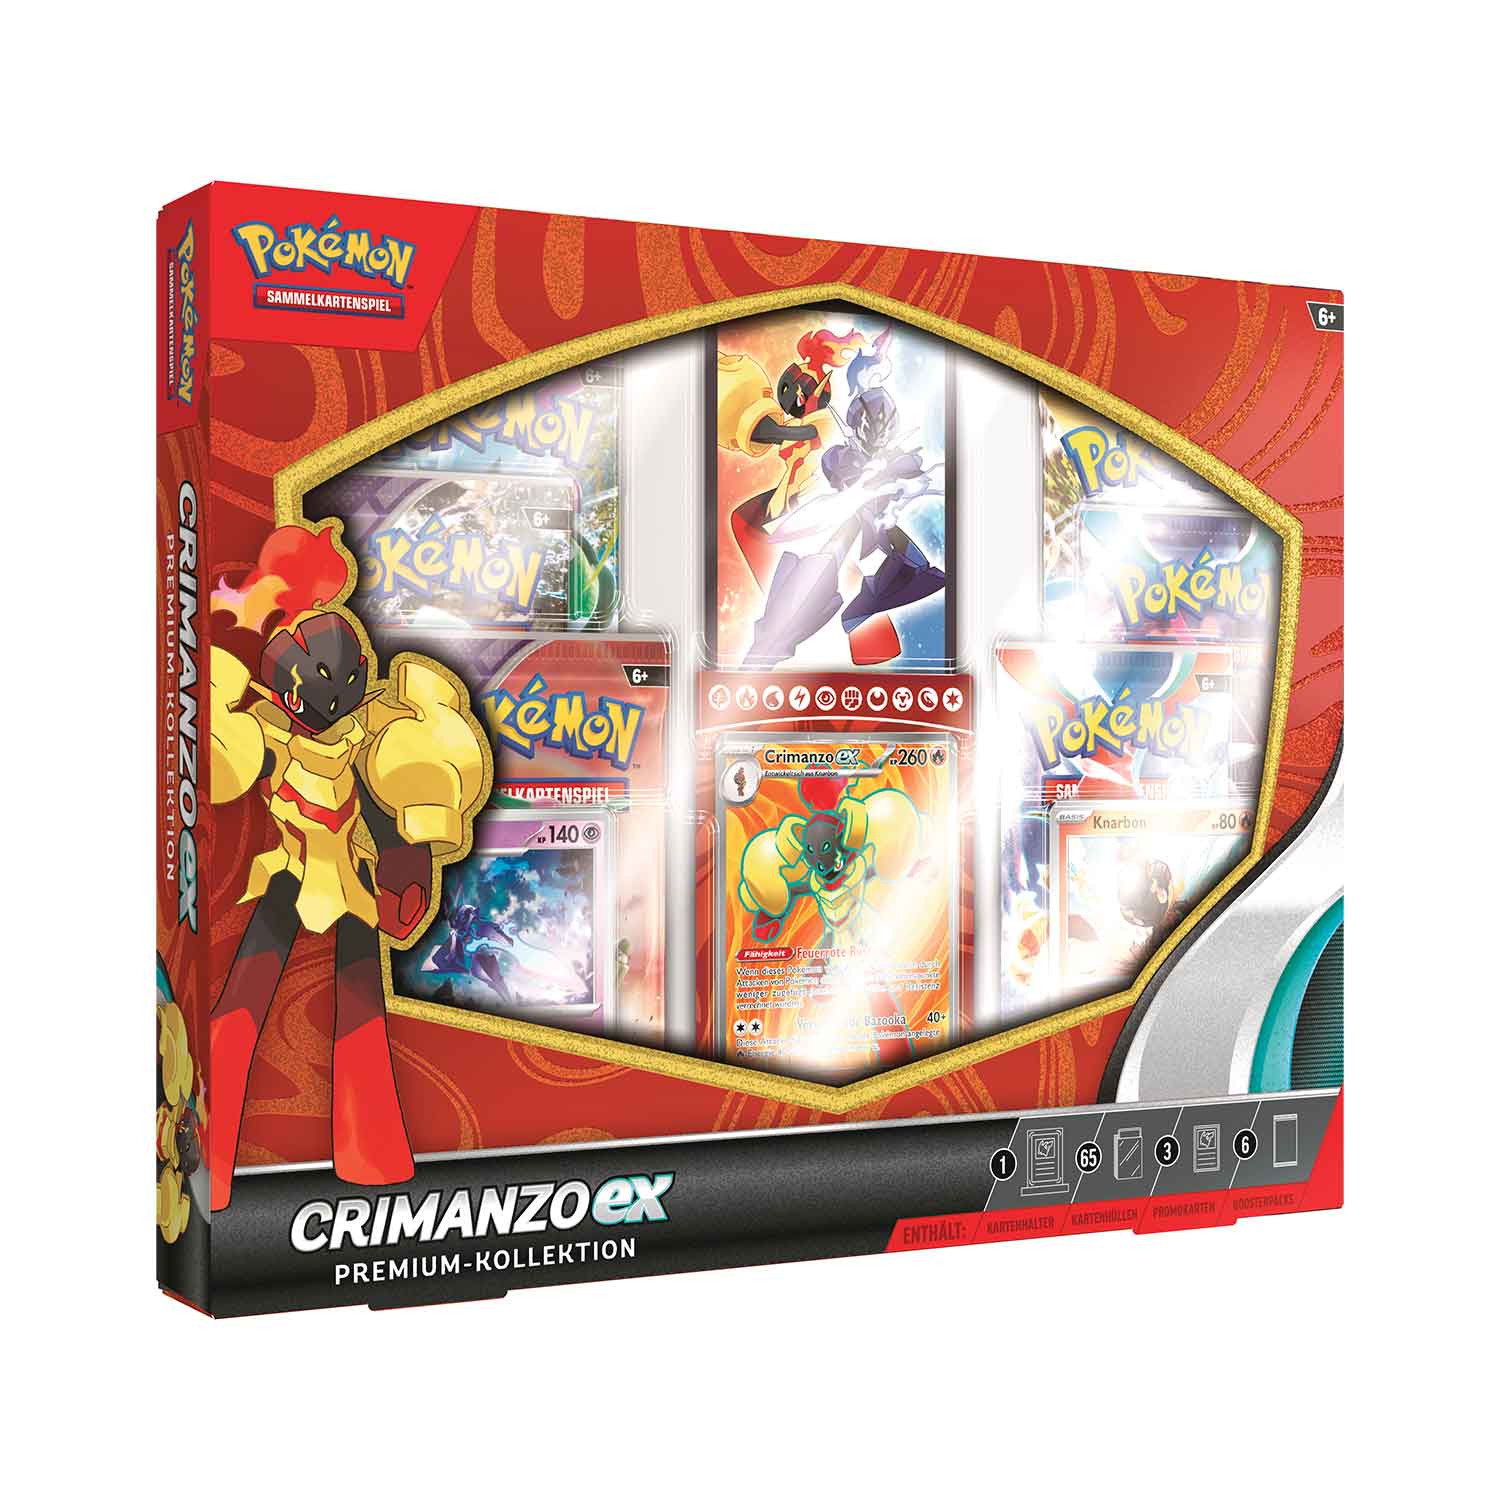 Pokémon Crimanzo-EX Premium-Kollektion  